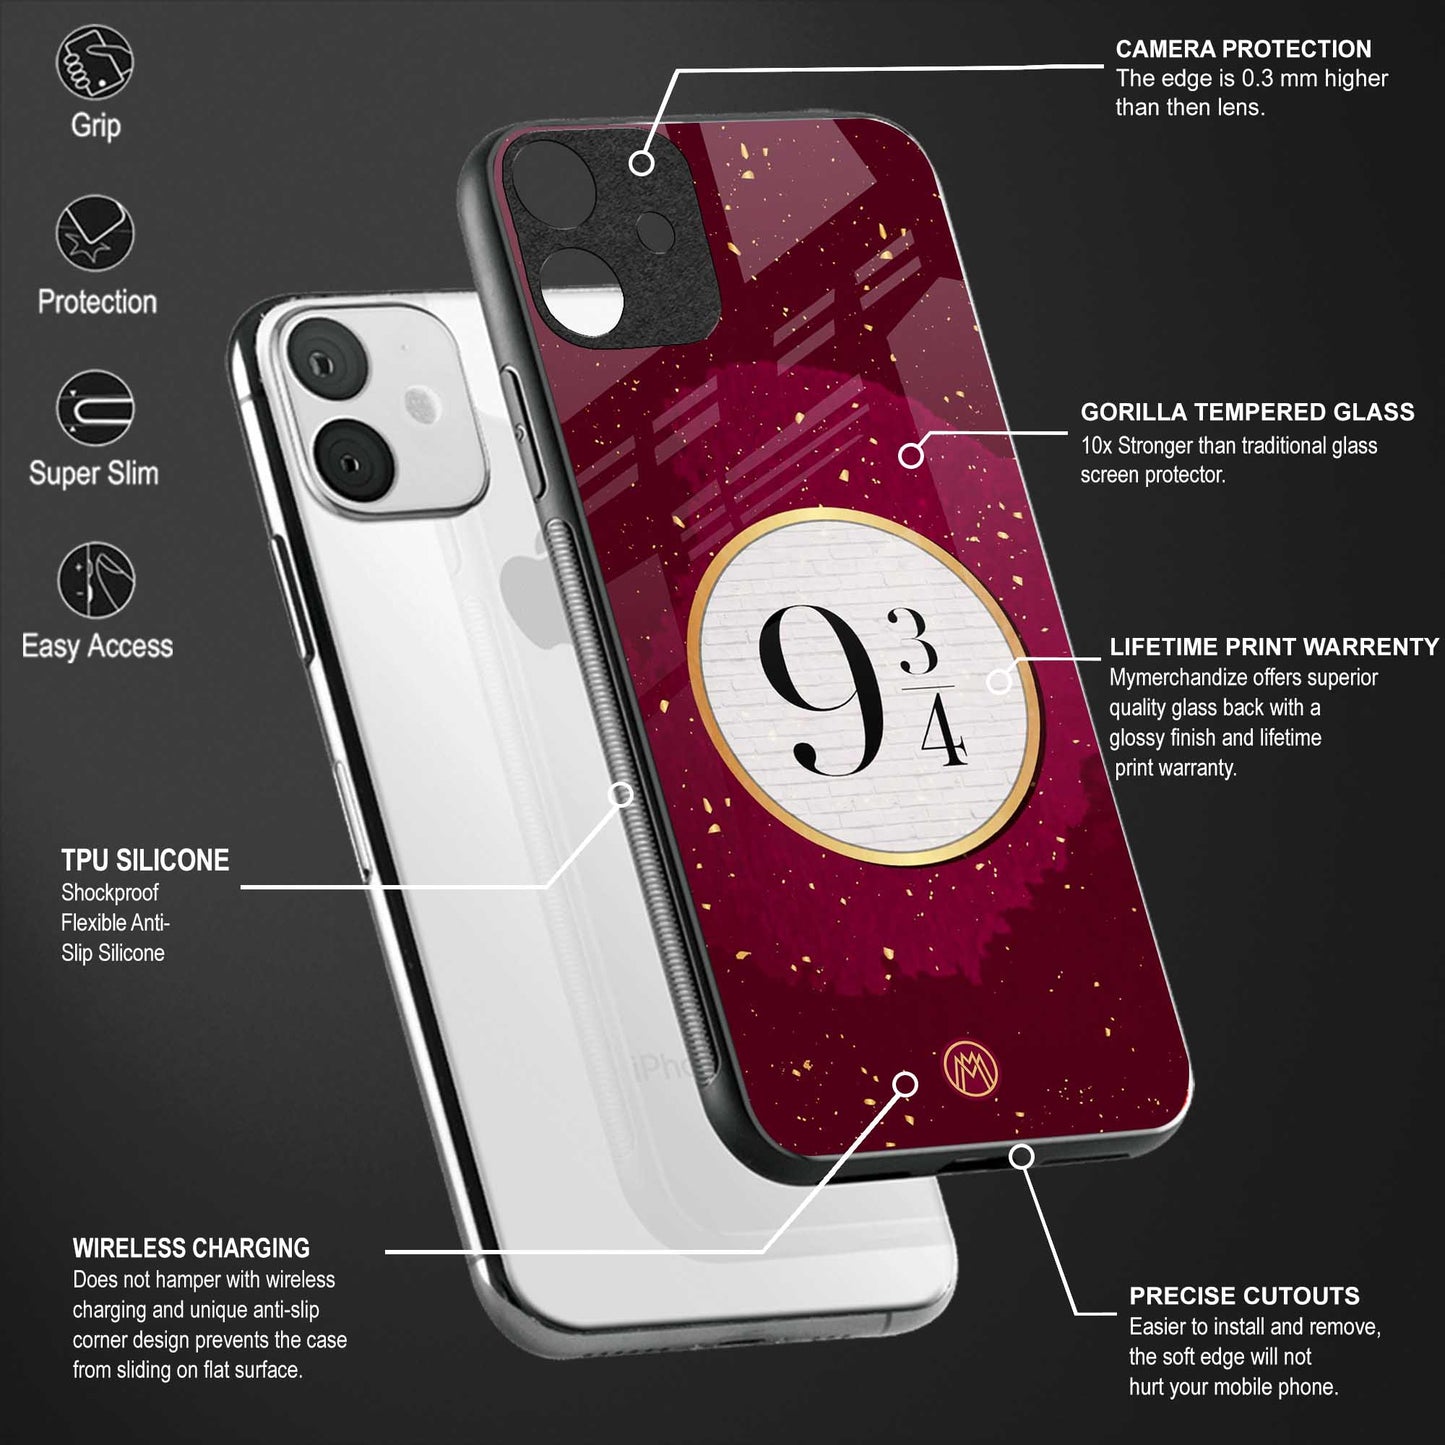 platform nine and three-quarters back phone cover | glass case for samsung galaxy f42